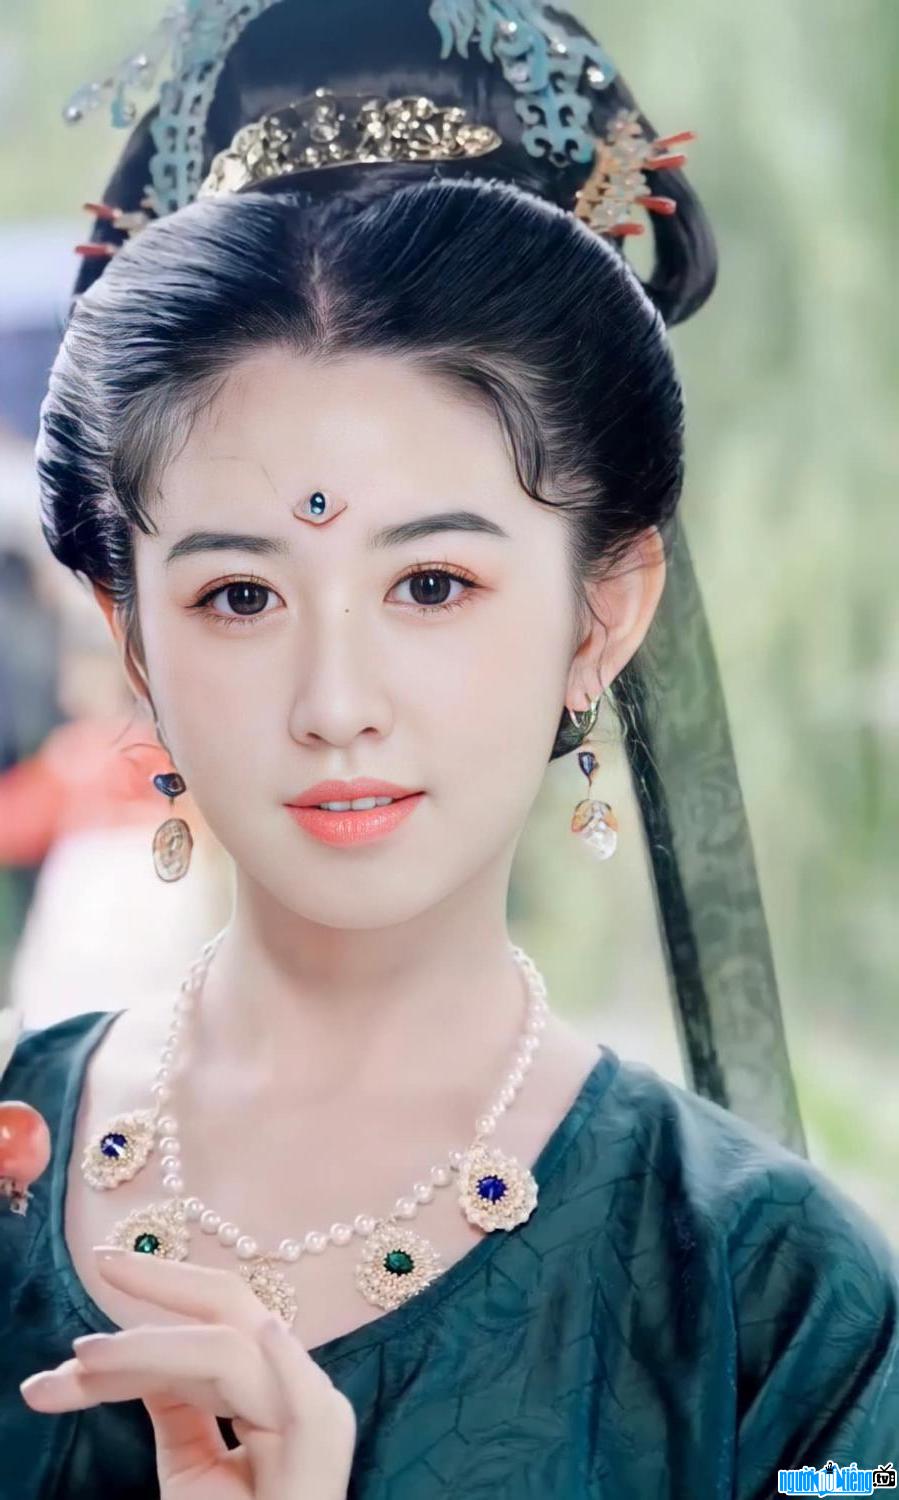  Creates a historical figure of actress Quyen Qui